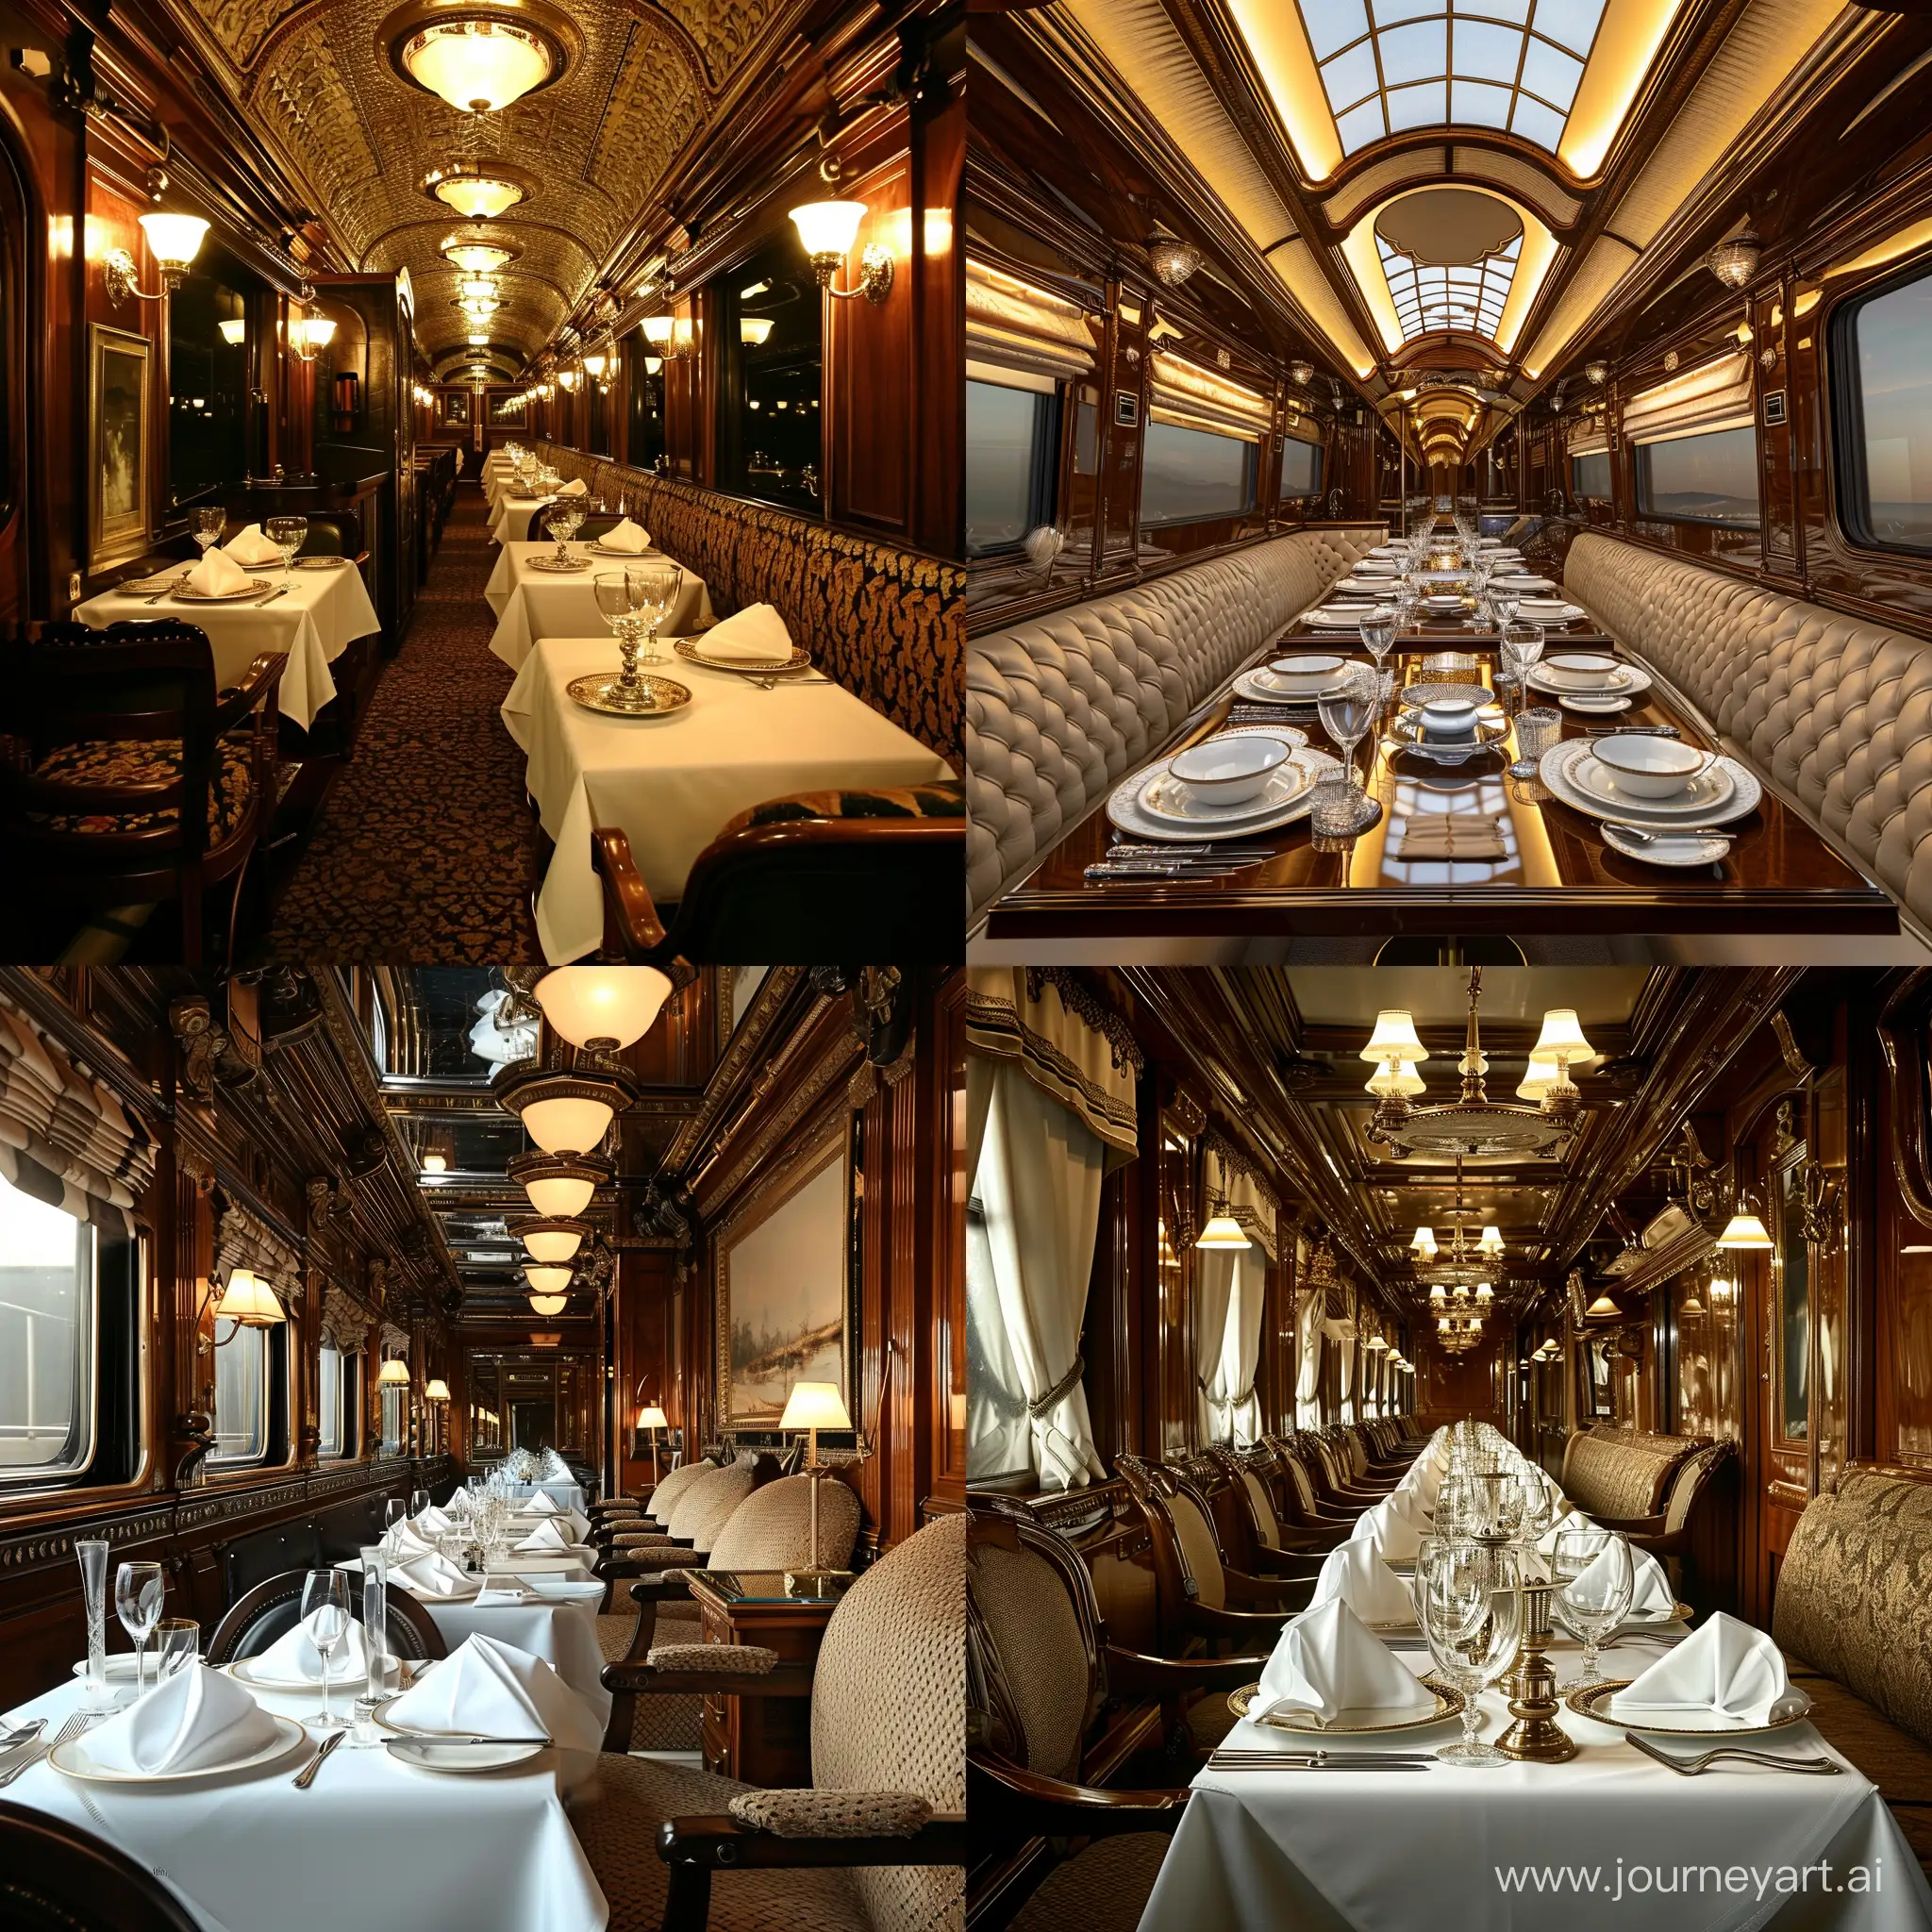 Luxury-Vintage-Dining-Car-Interior-with-Elegant-Design